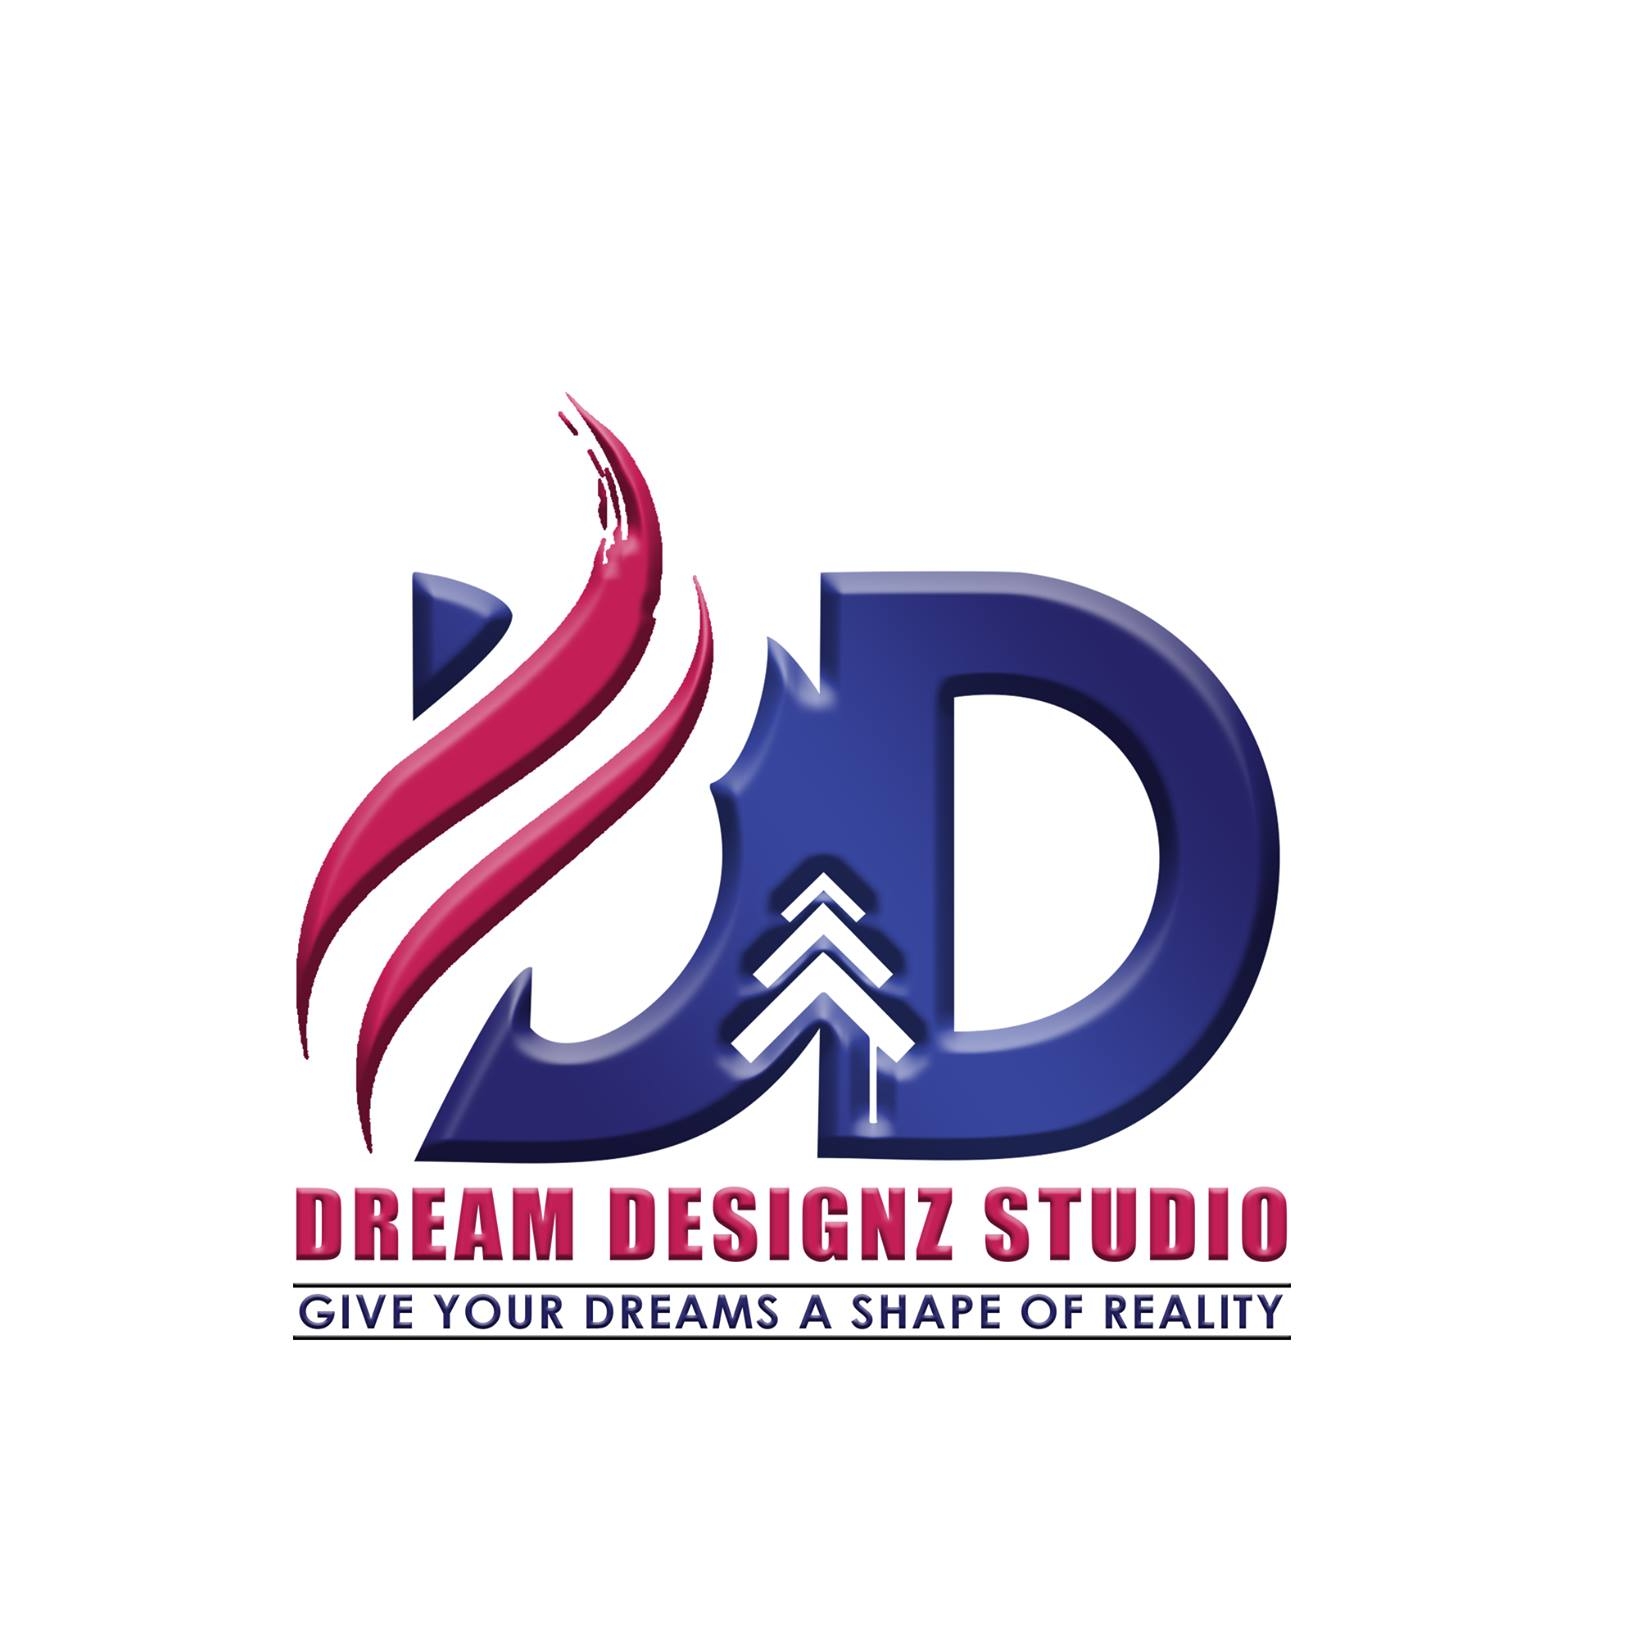 DREAM DESIGNZ STUDIO|Accounting Services|Professional Services